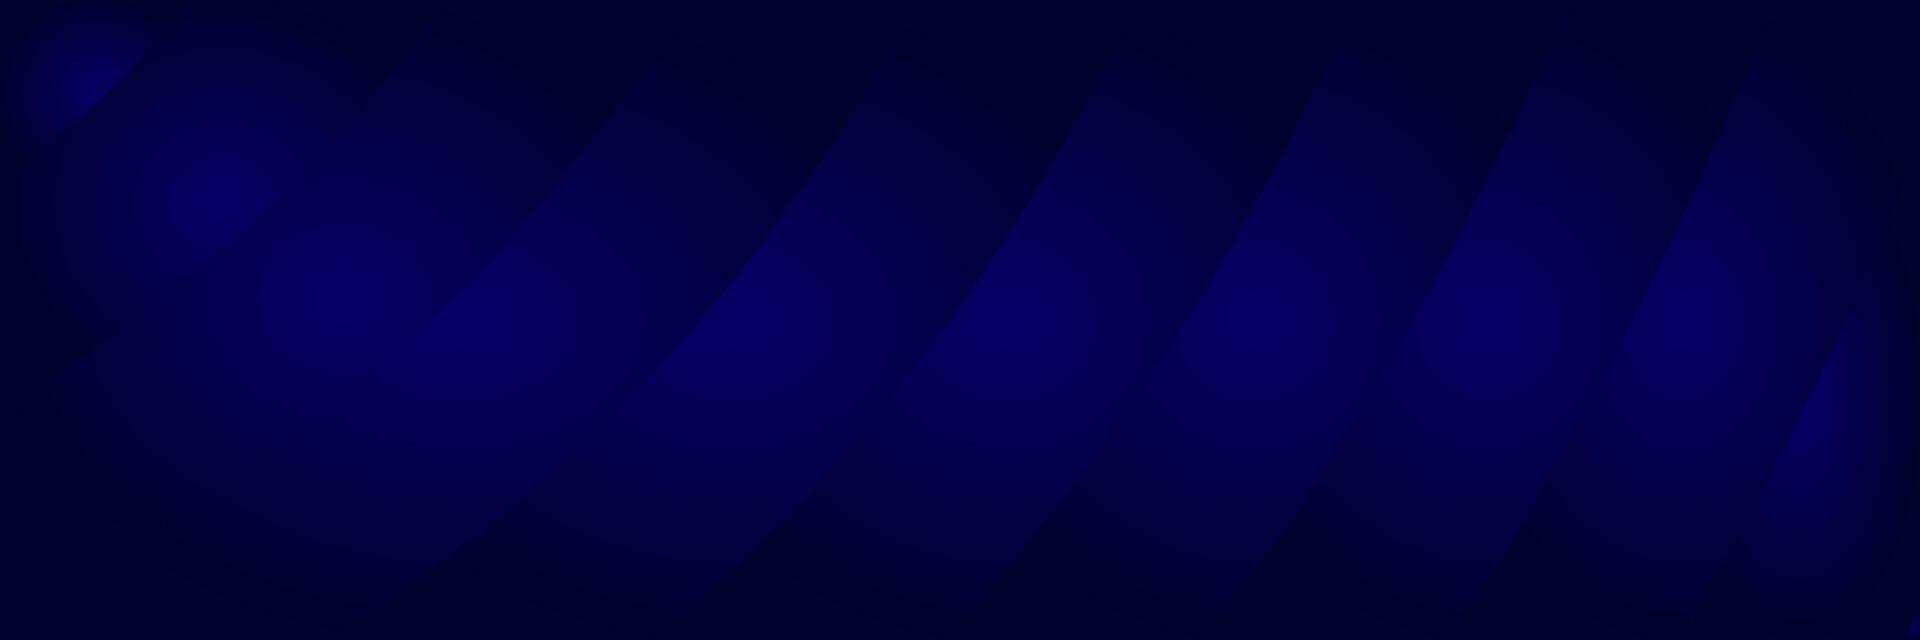 abstract dark blue elegant corporate background vector